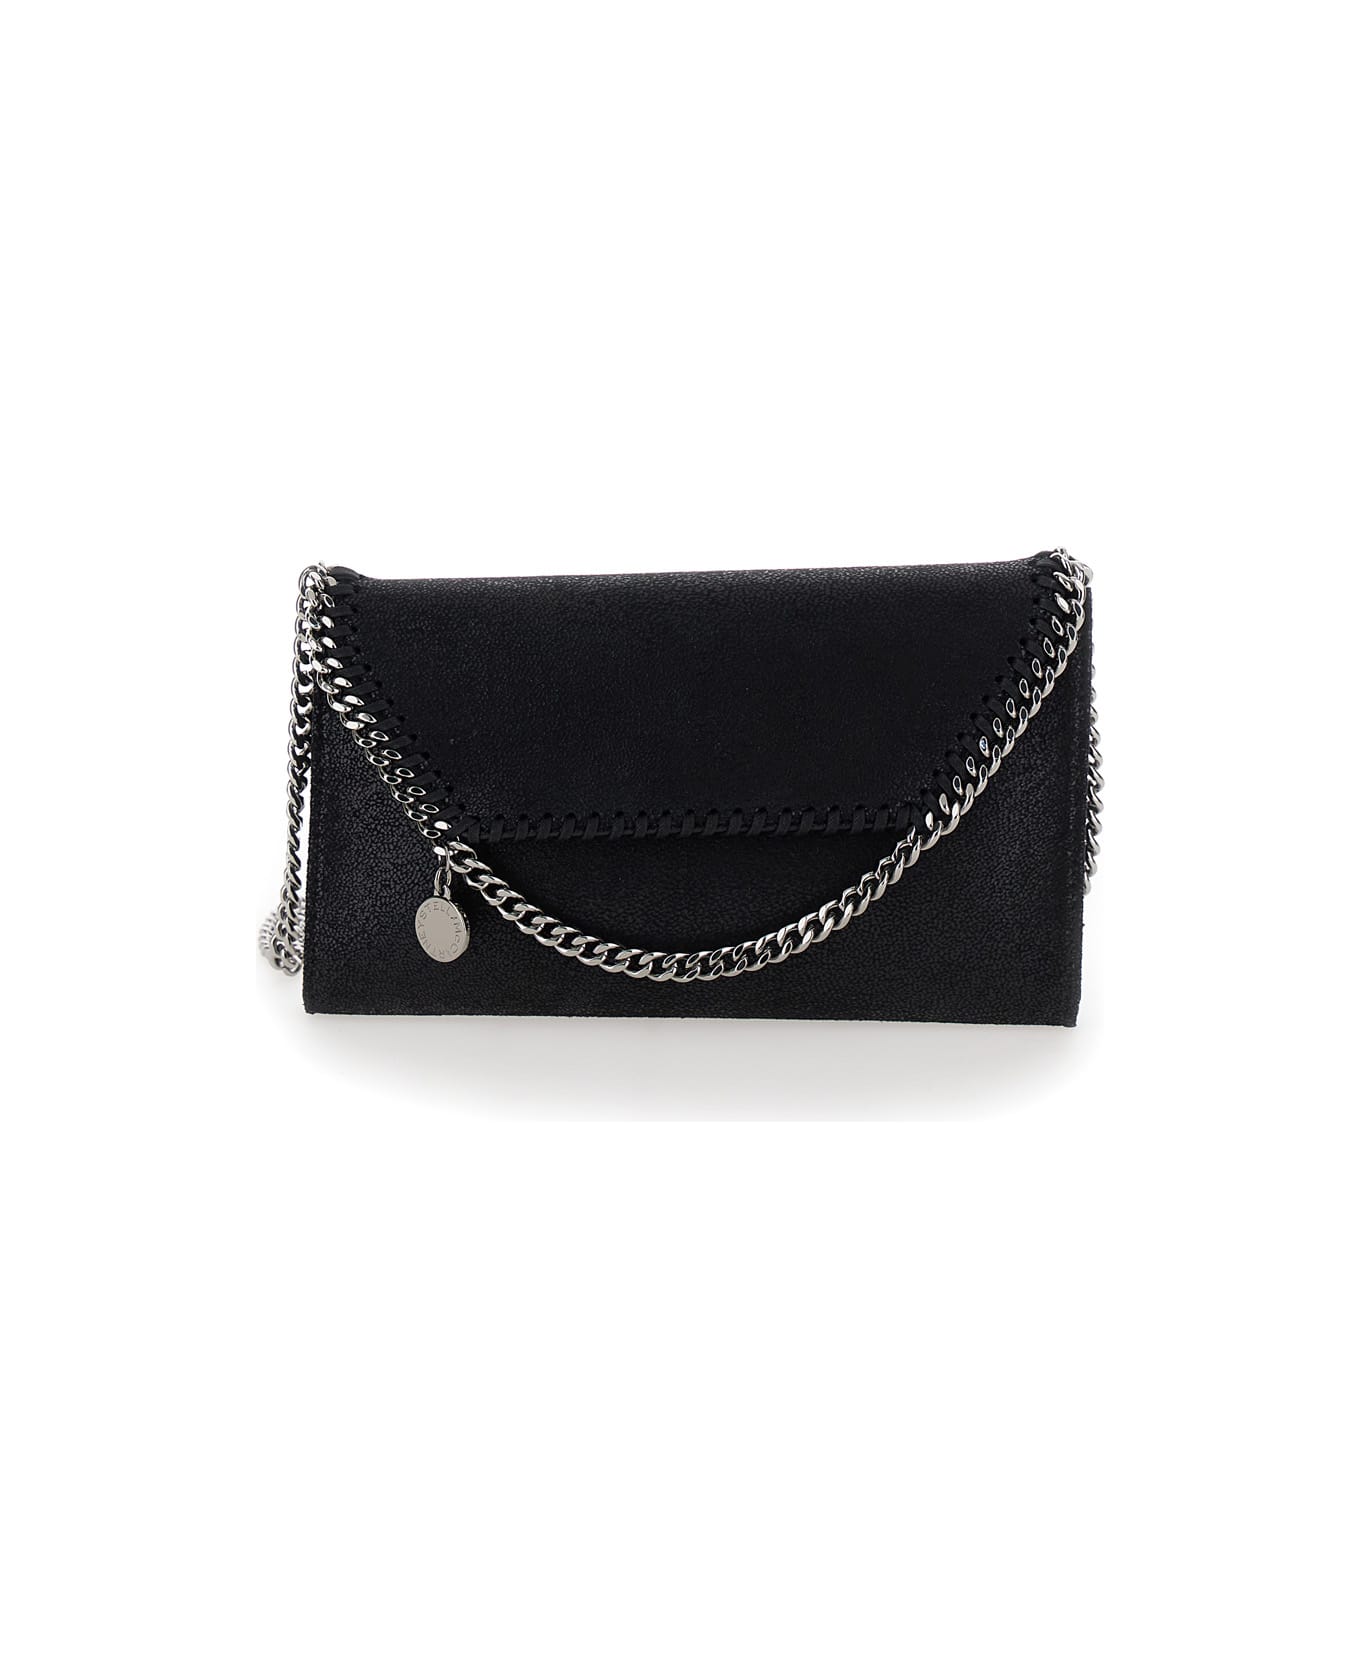 Stella McCartney 'mini Falabella' Black Crossbody Bag With Logo Charm In Eco Leather Woman - Black